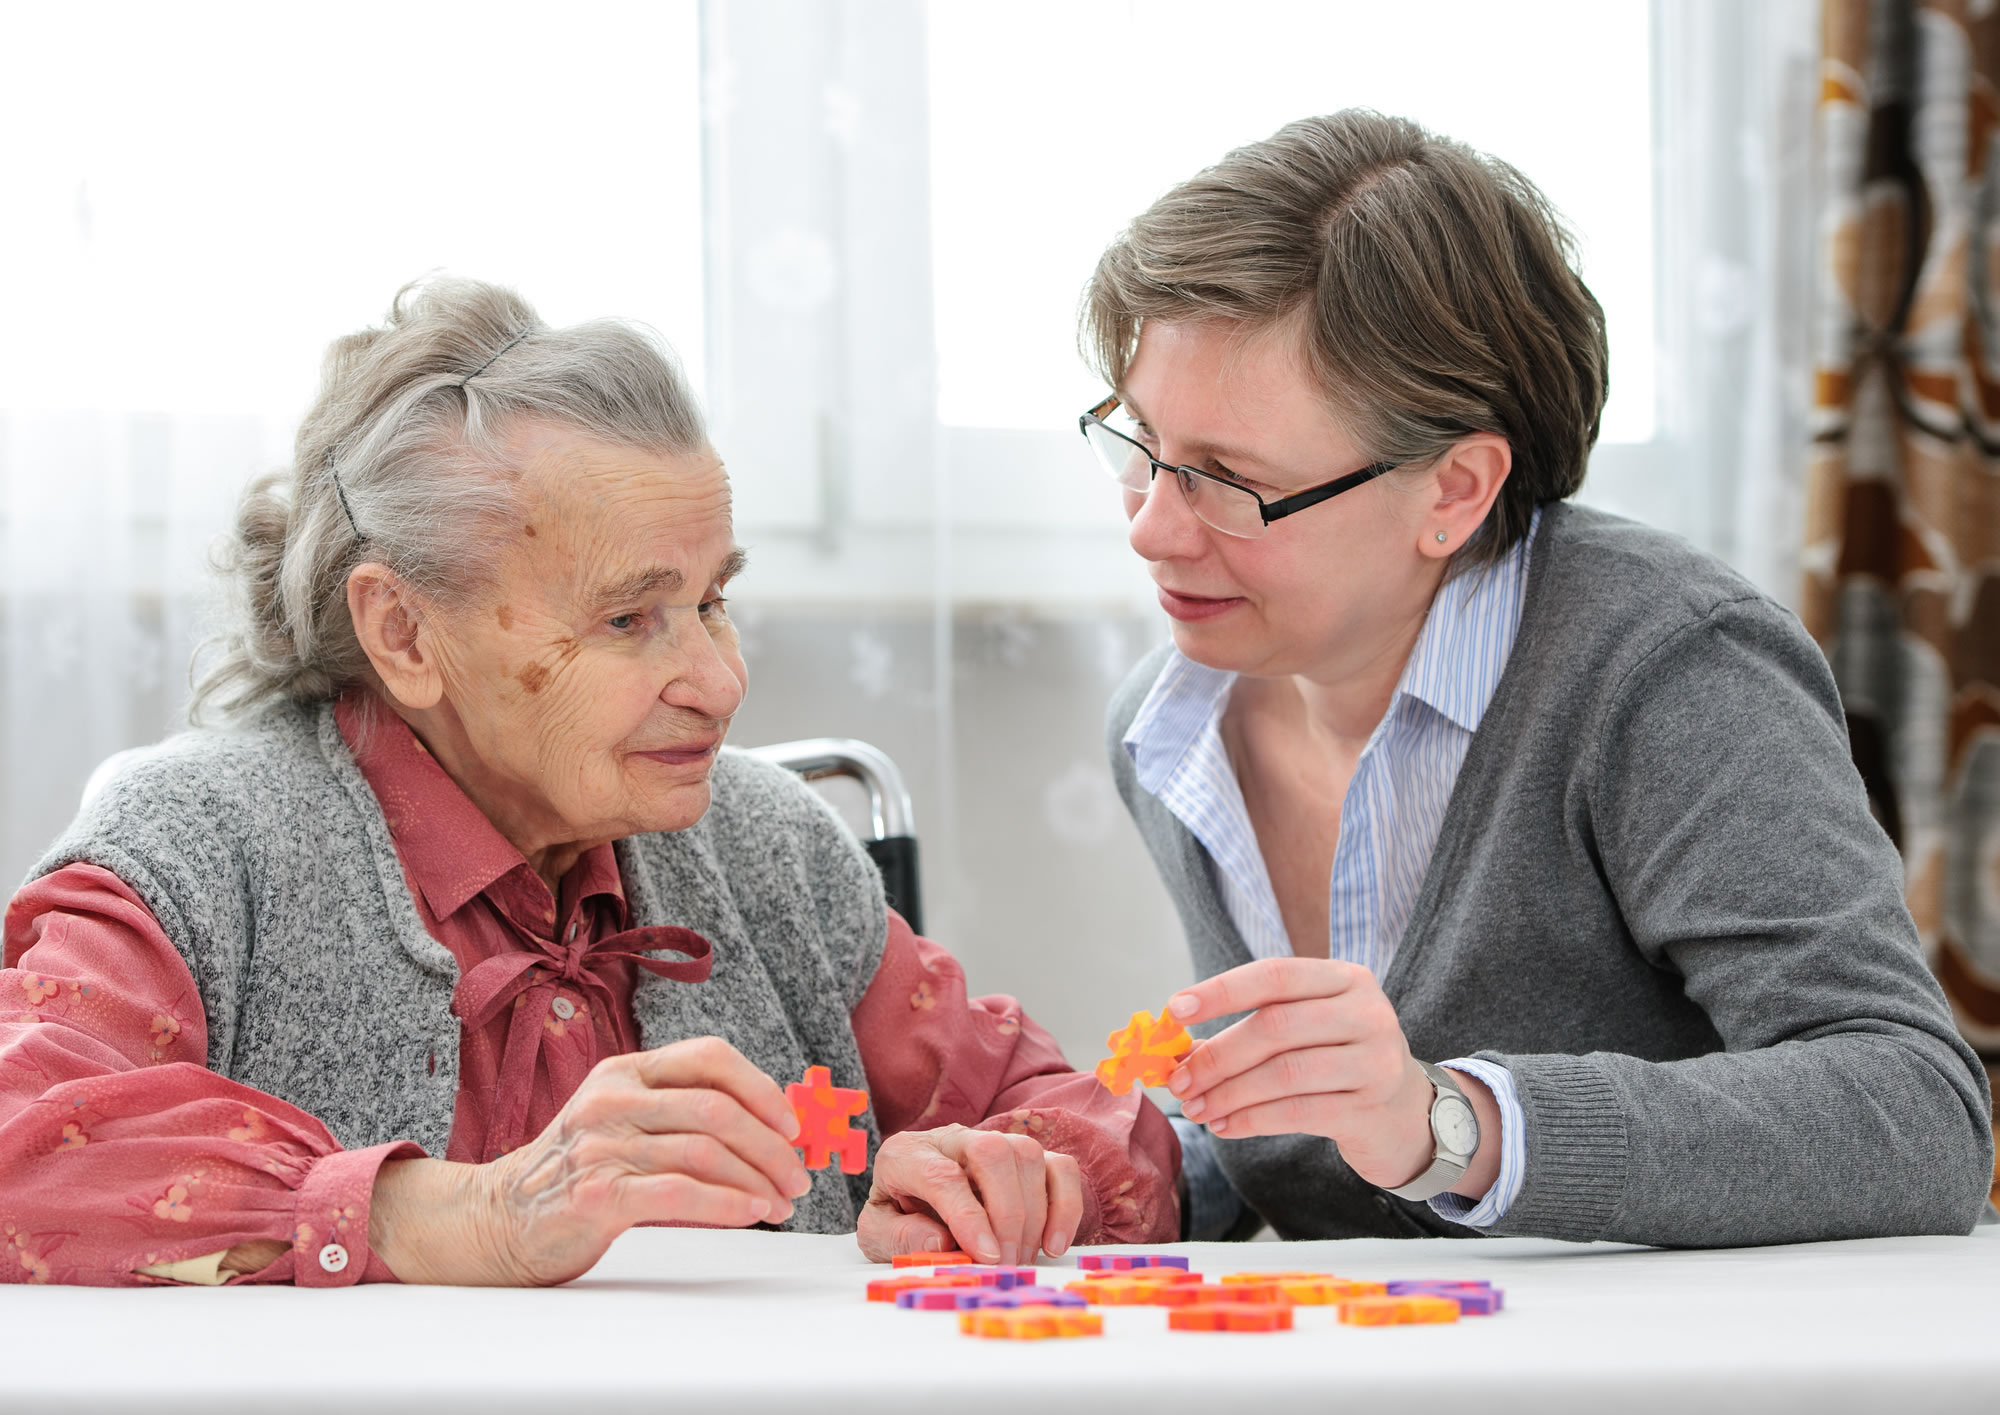 dementia care plan